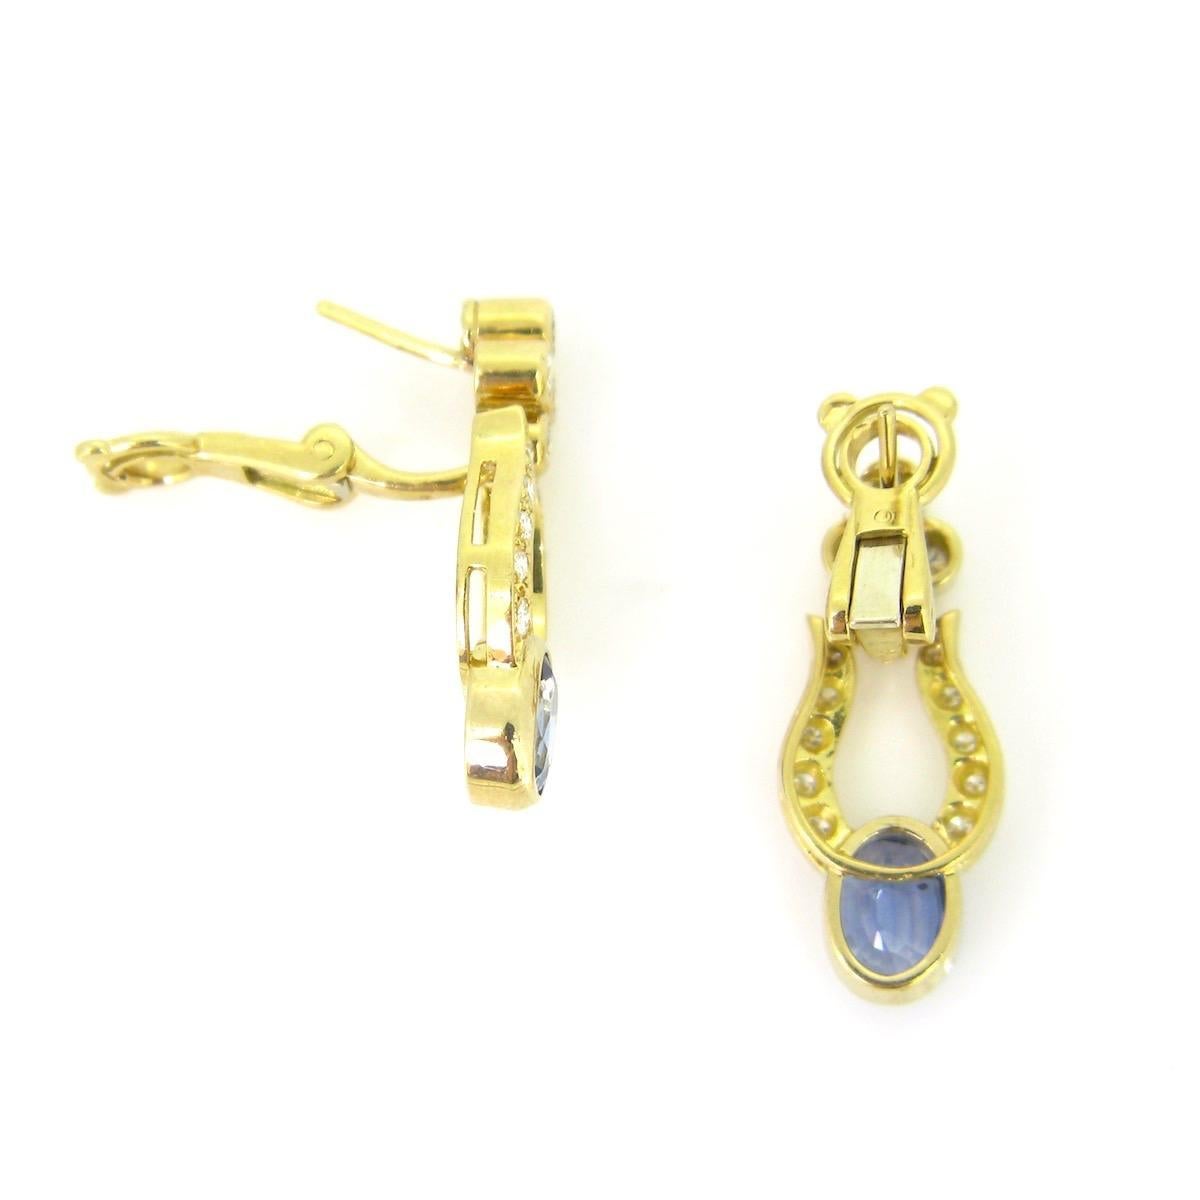 Brilliant Cut Ceylon Sapphires and Diamonds Earrings, 18kt Yellow Gold, France